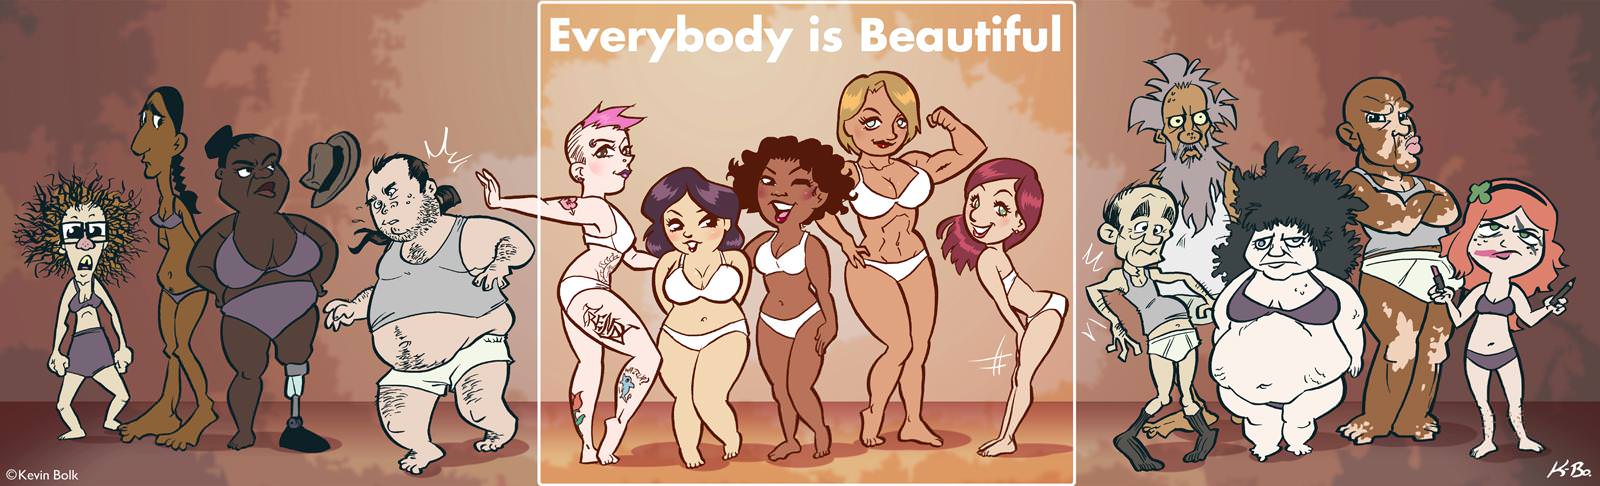 everybody_is_beautiful.jpg